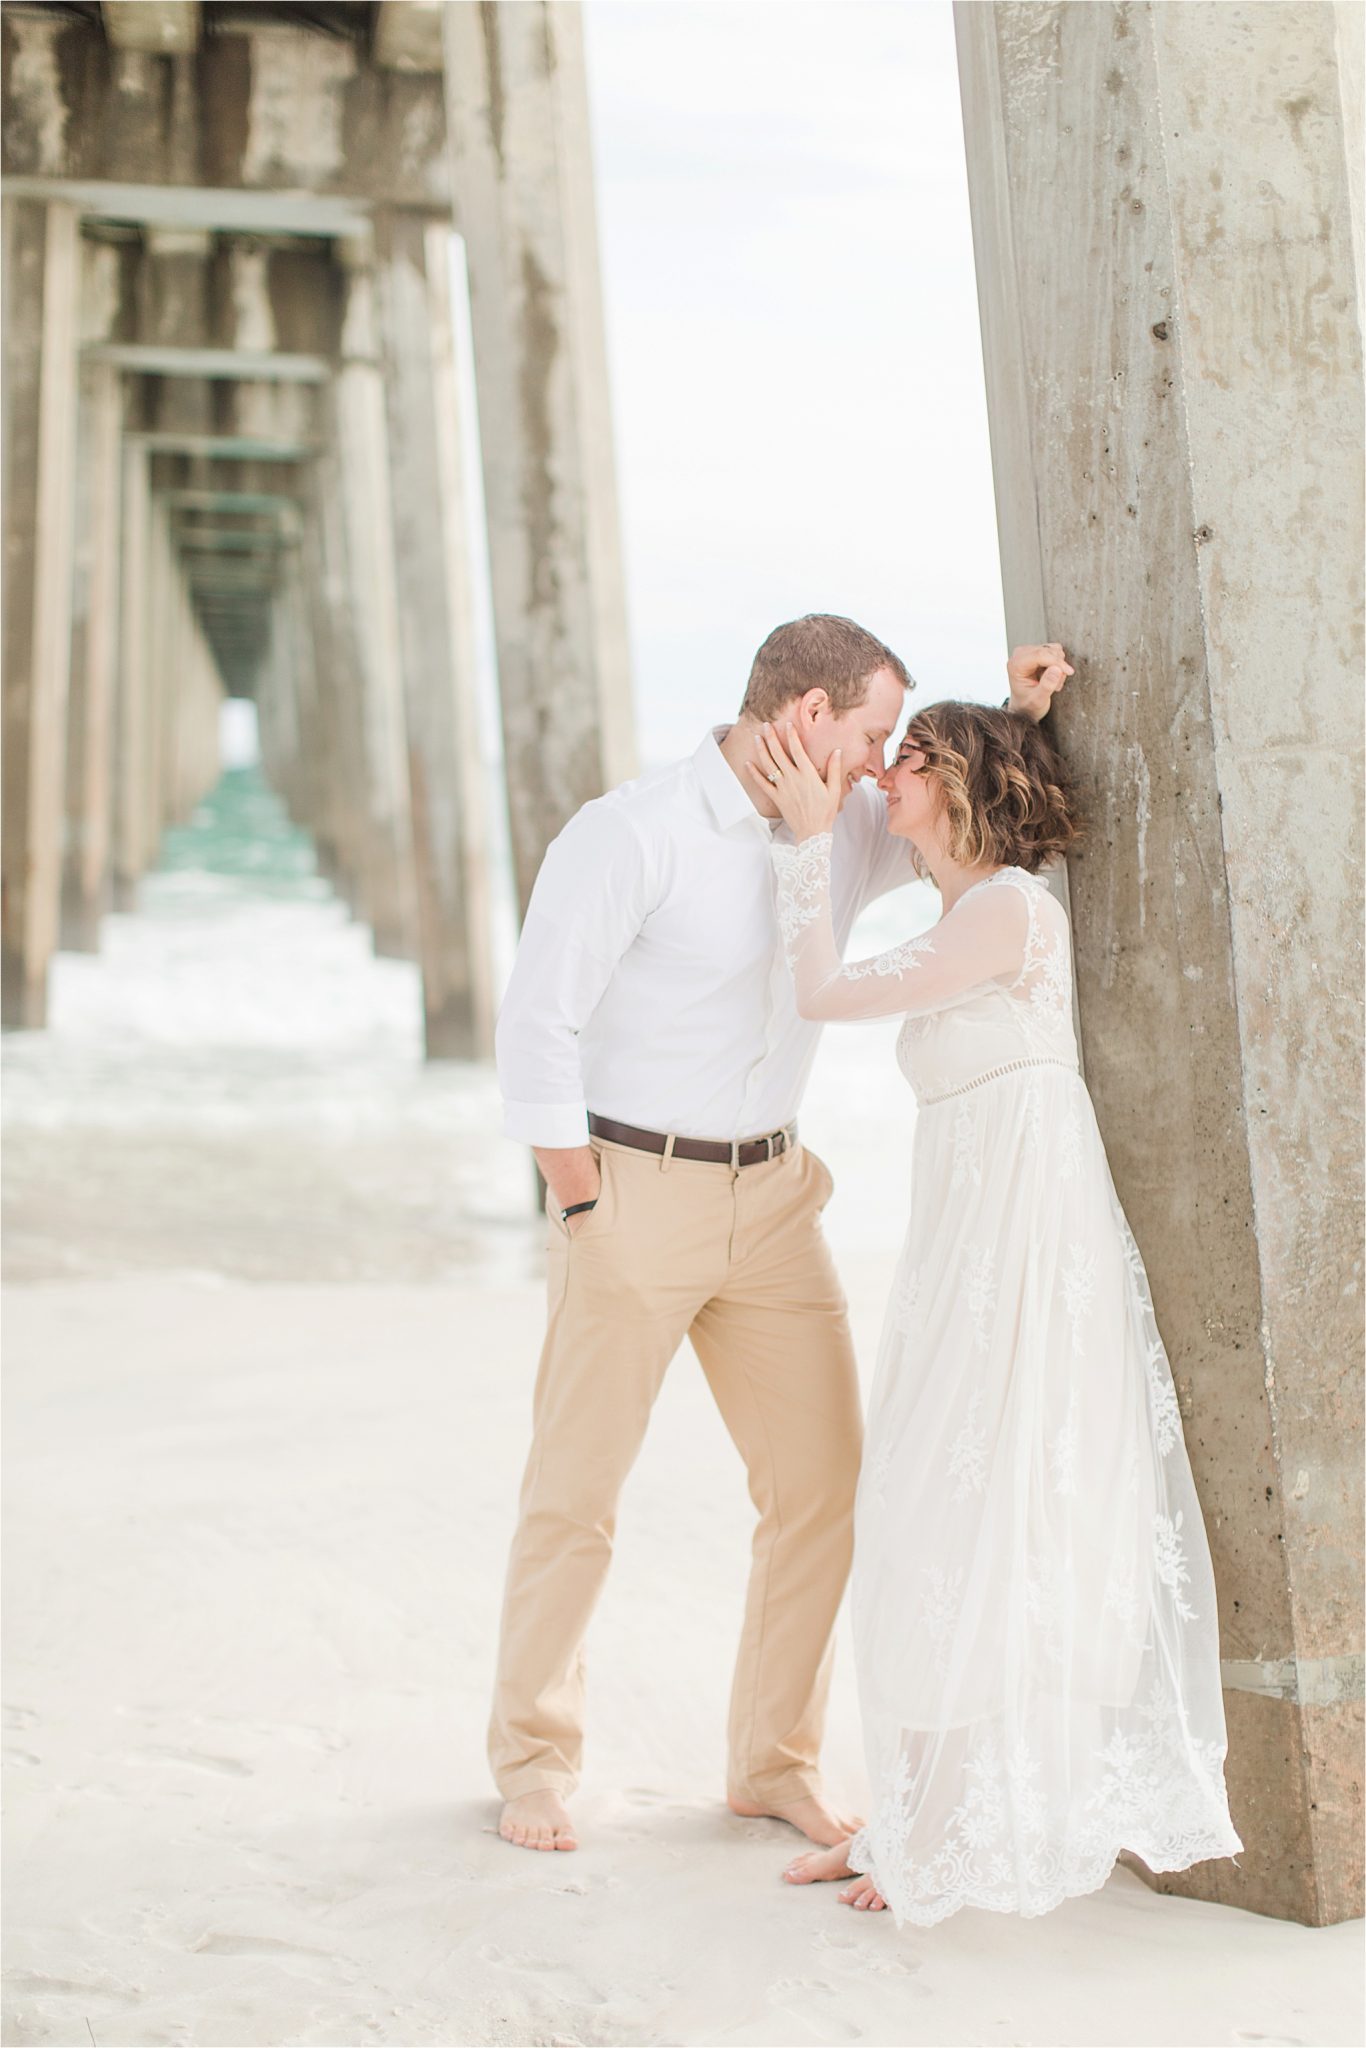 Romantic Pensacola Beach Photos at Sunset-Neil + Steph-Engagement Shoot Inspiration-Beach engagement shoot